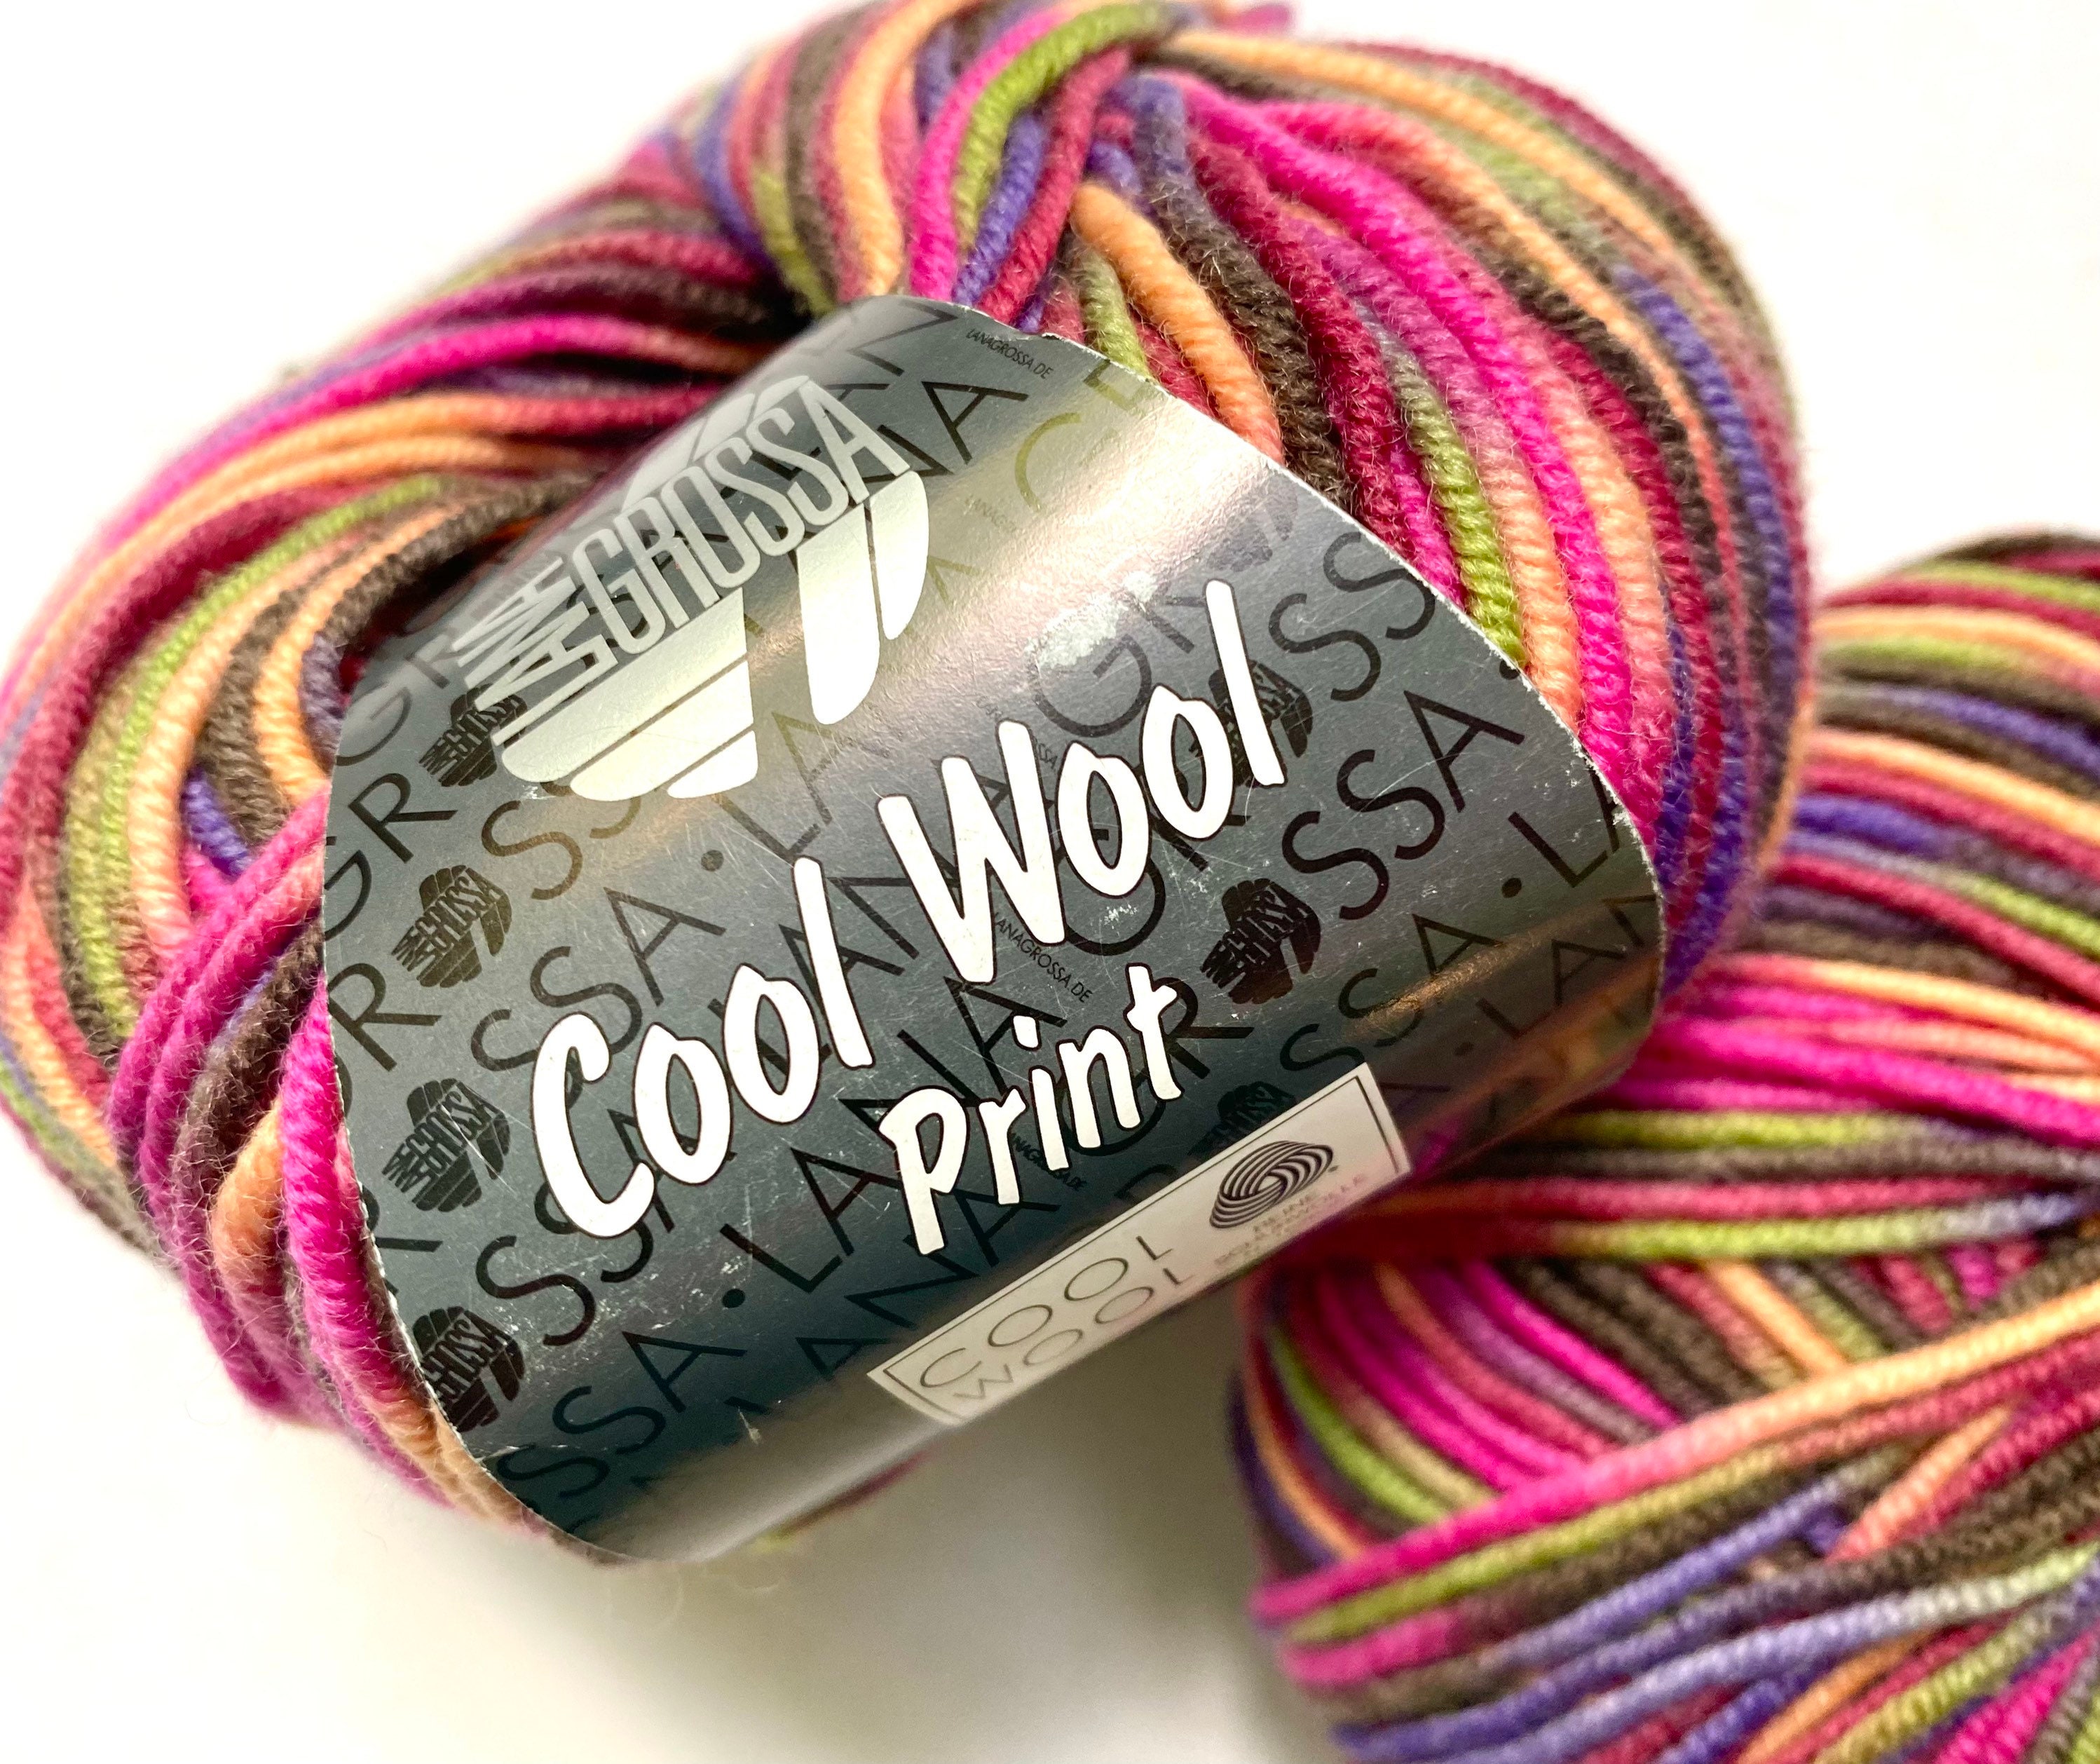 55% off Lana Grossas Cool Print Merino Wool Yarn - Etsy